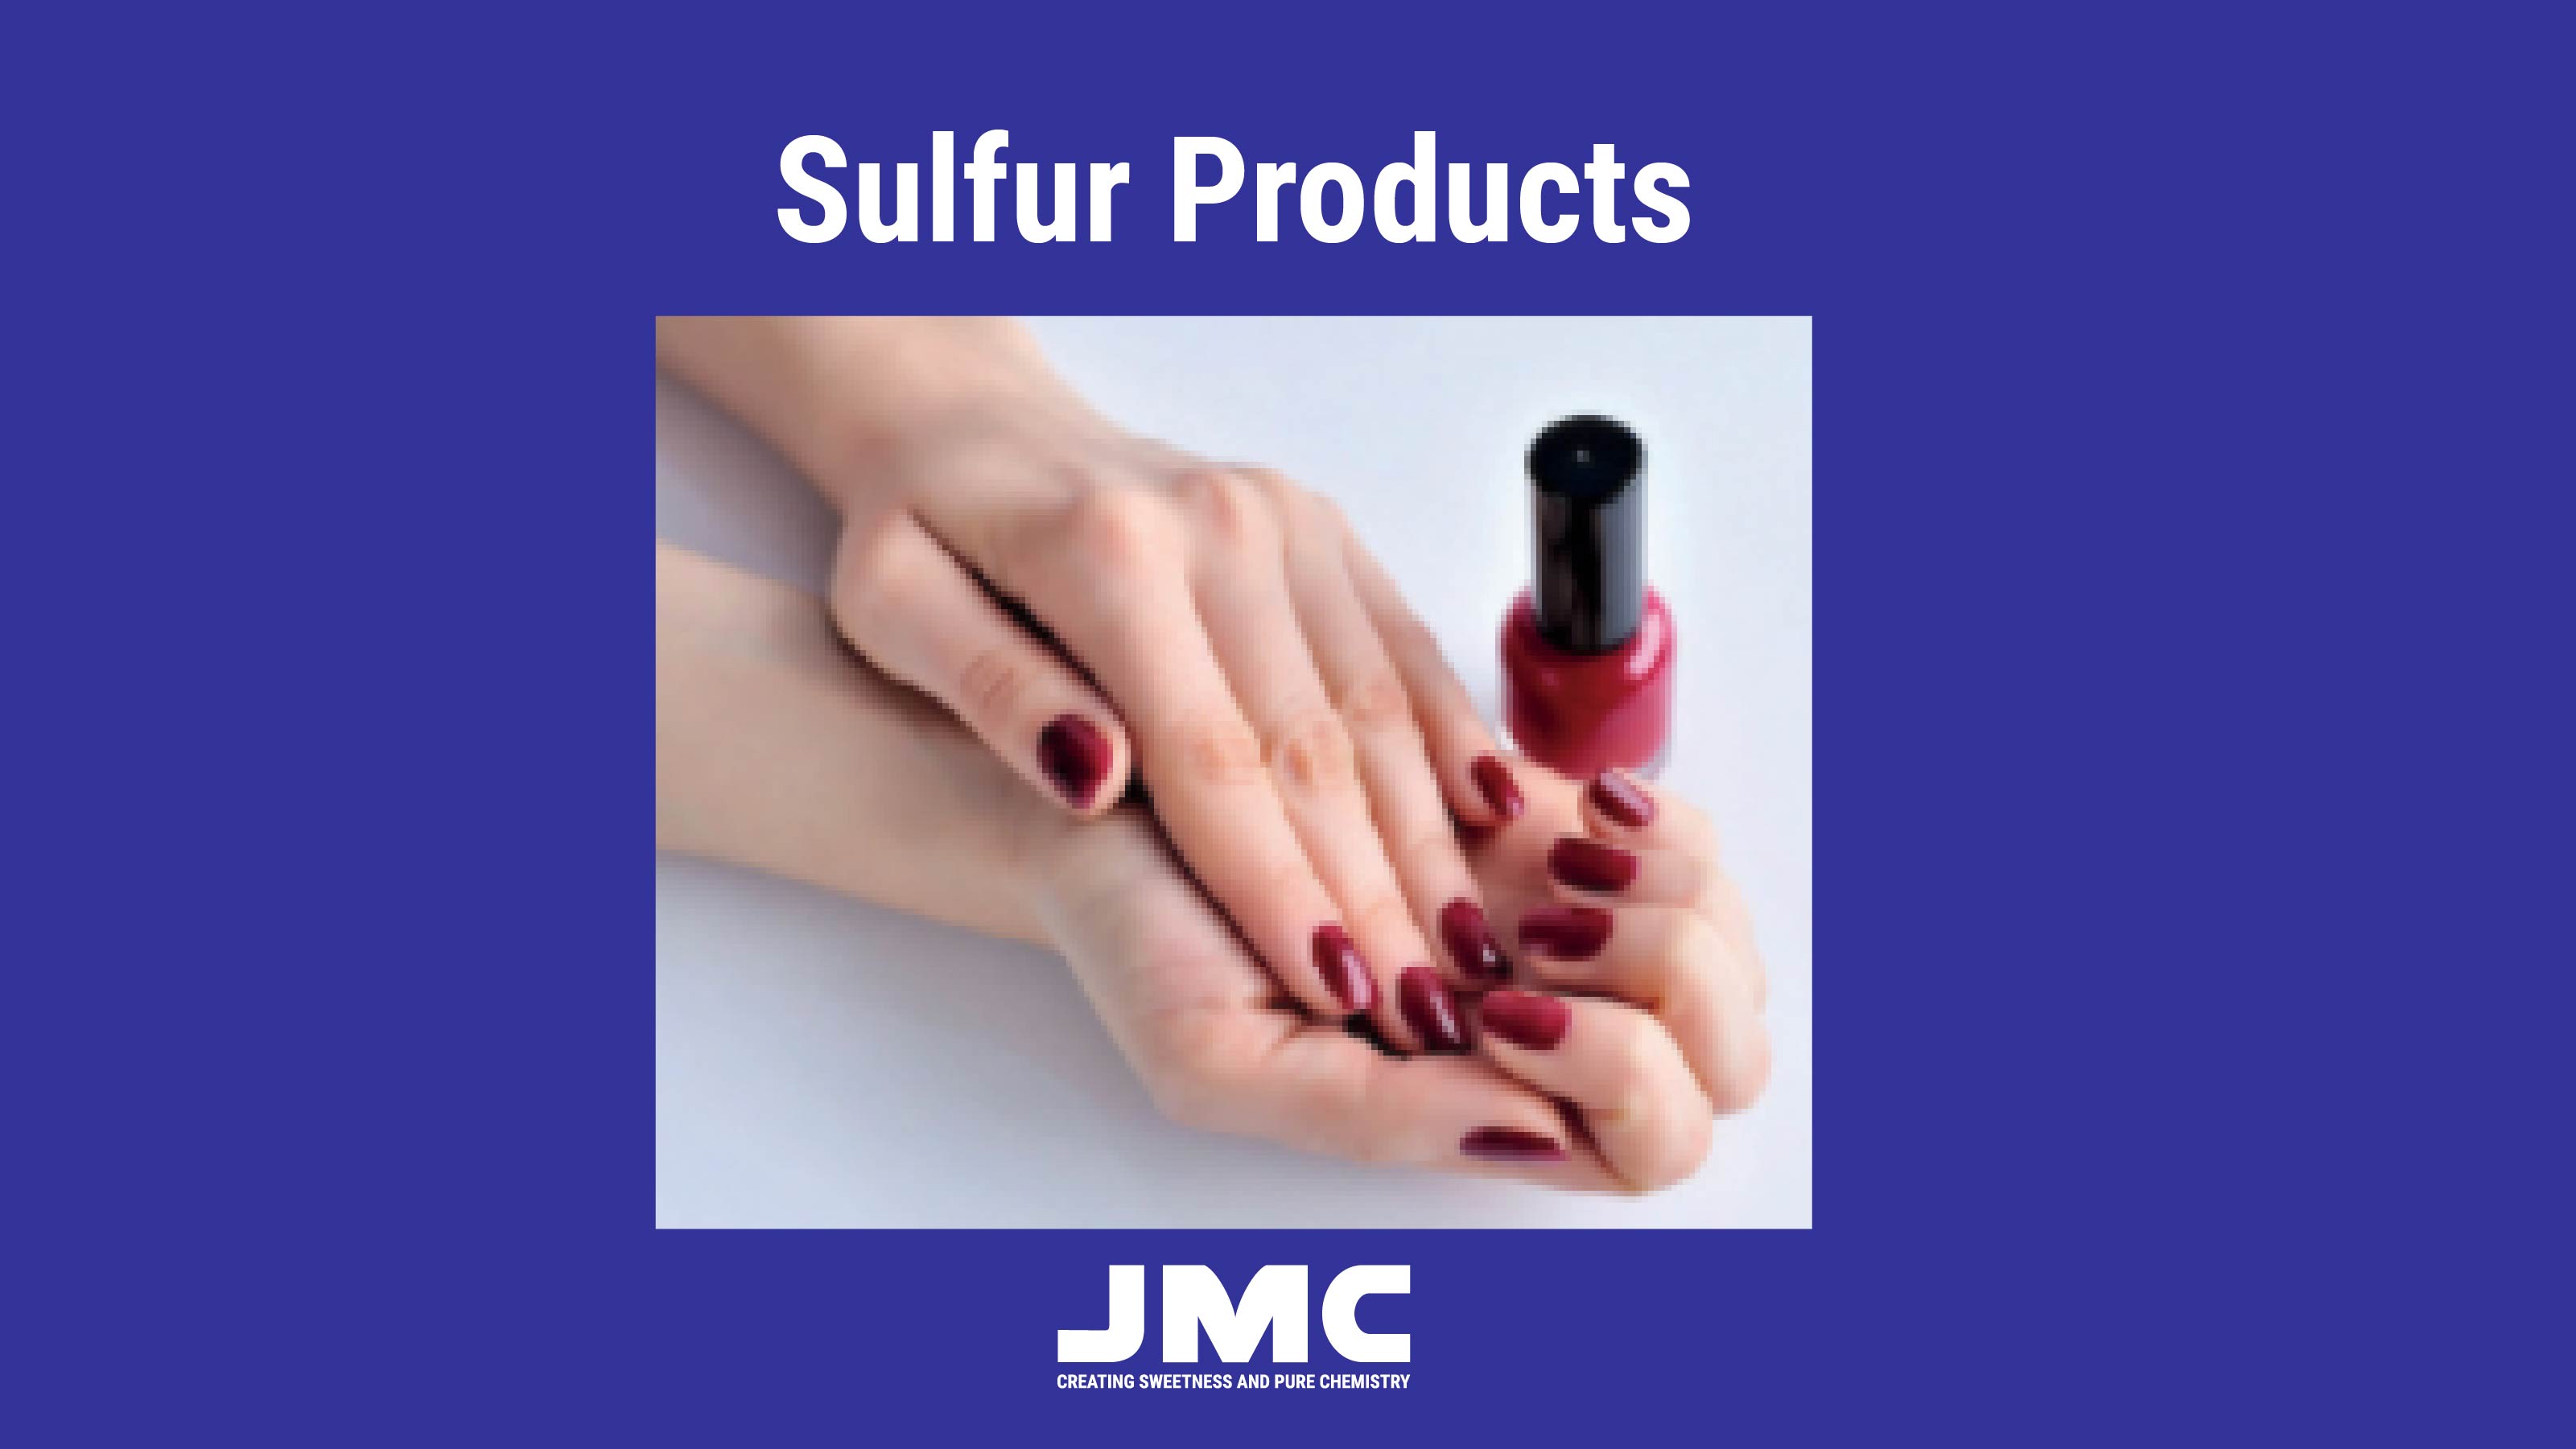 Sulfur-based fine chemicals